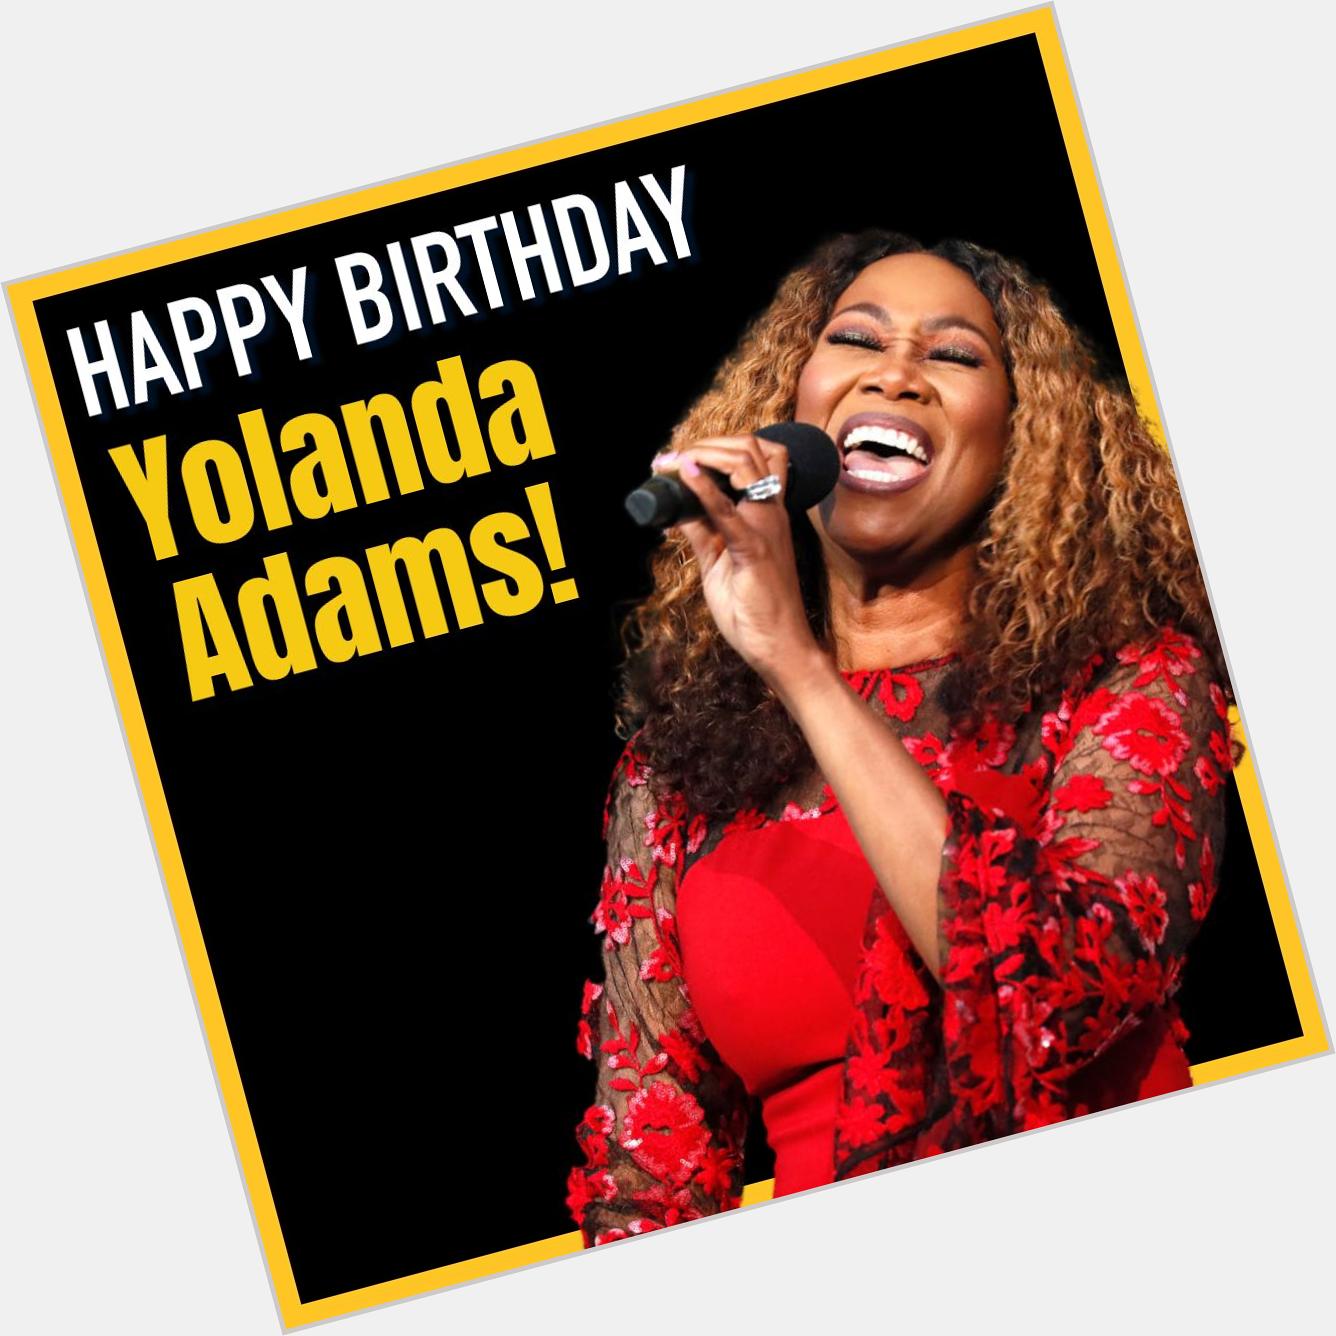 Happy Birthday to singer Yolanda Adams! She\s turning 58 today. 